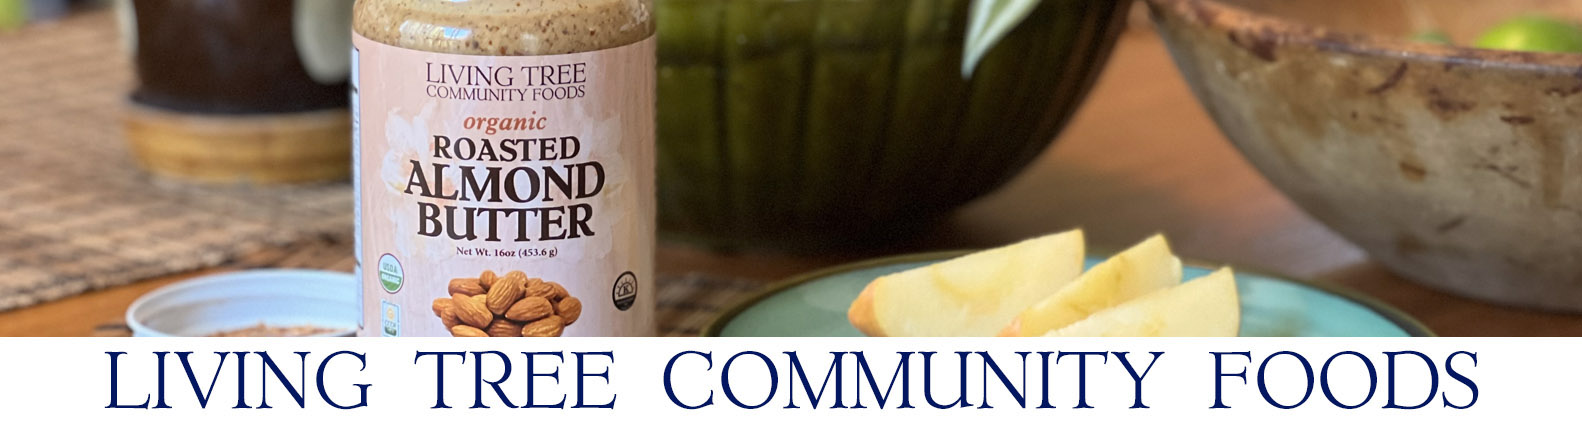 Roasted Almond Butter Newsletter Header